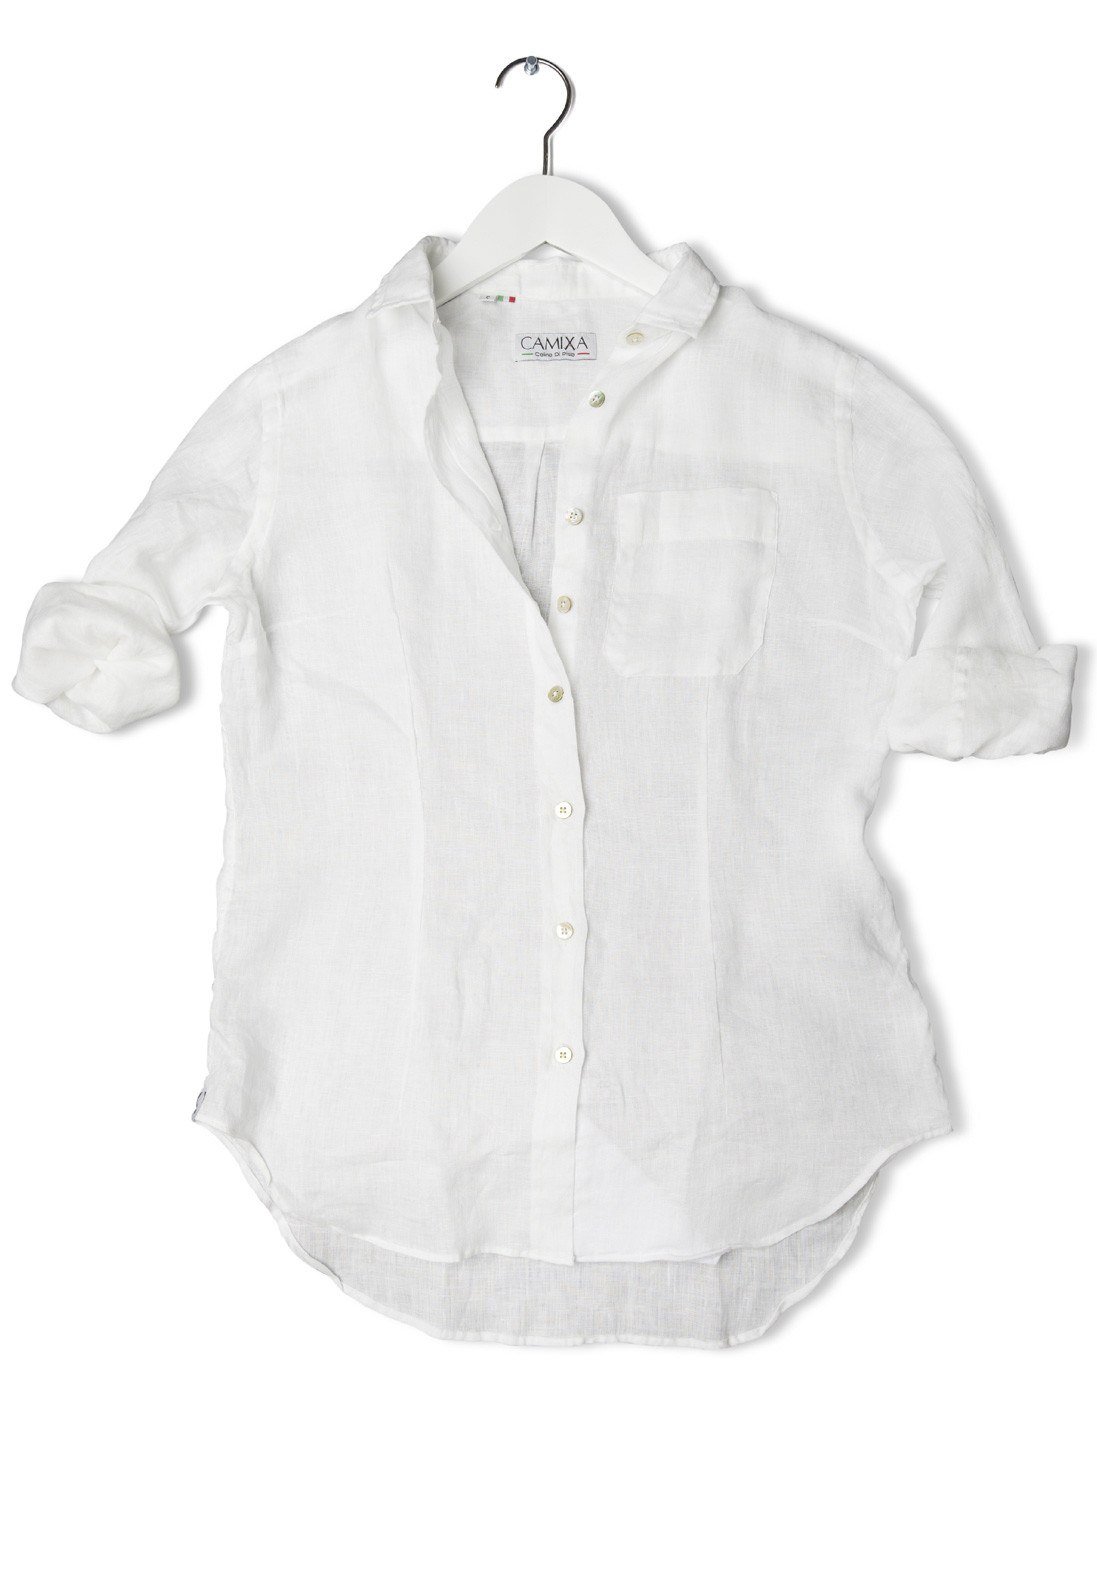 Camixa Lina White Linen Shirt